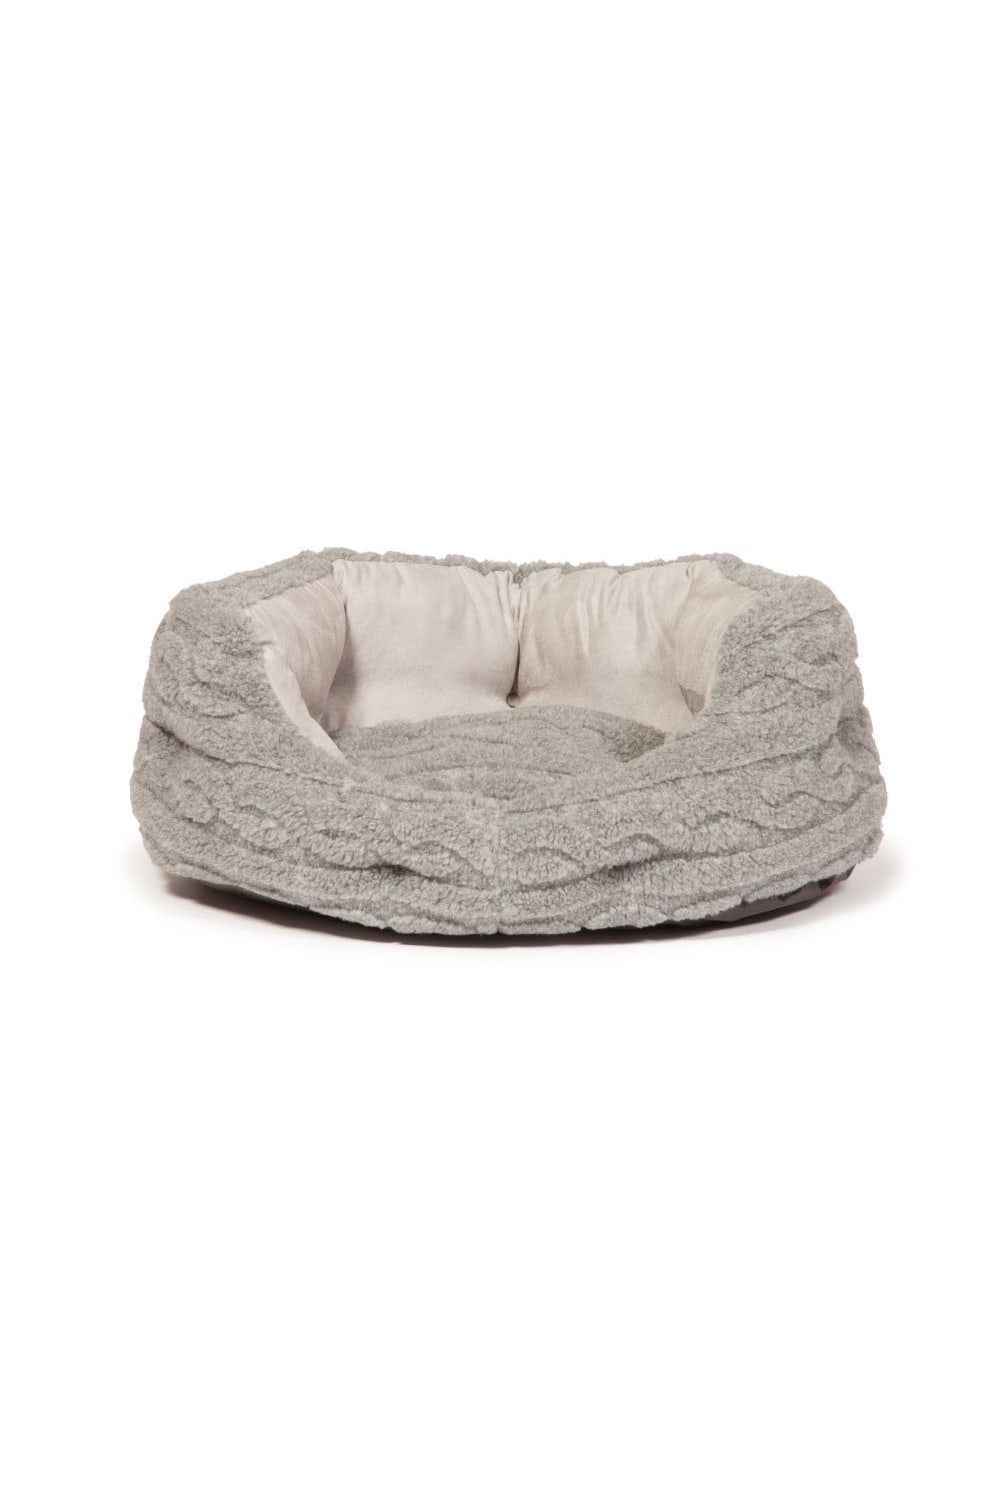 Danish Design Bobble Pewter Deluxe Slumber Dog Bed (Pewter) (30 Inch)